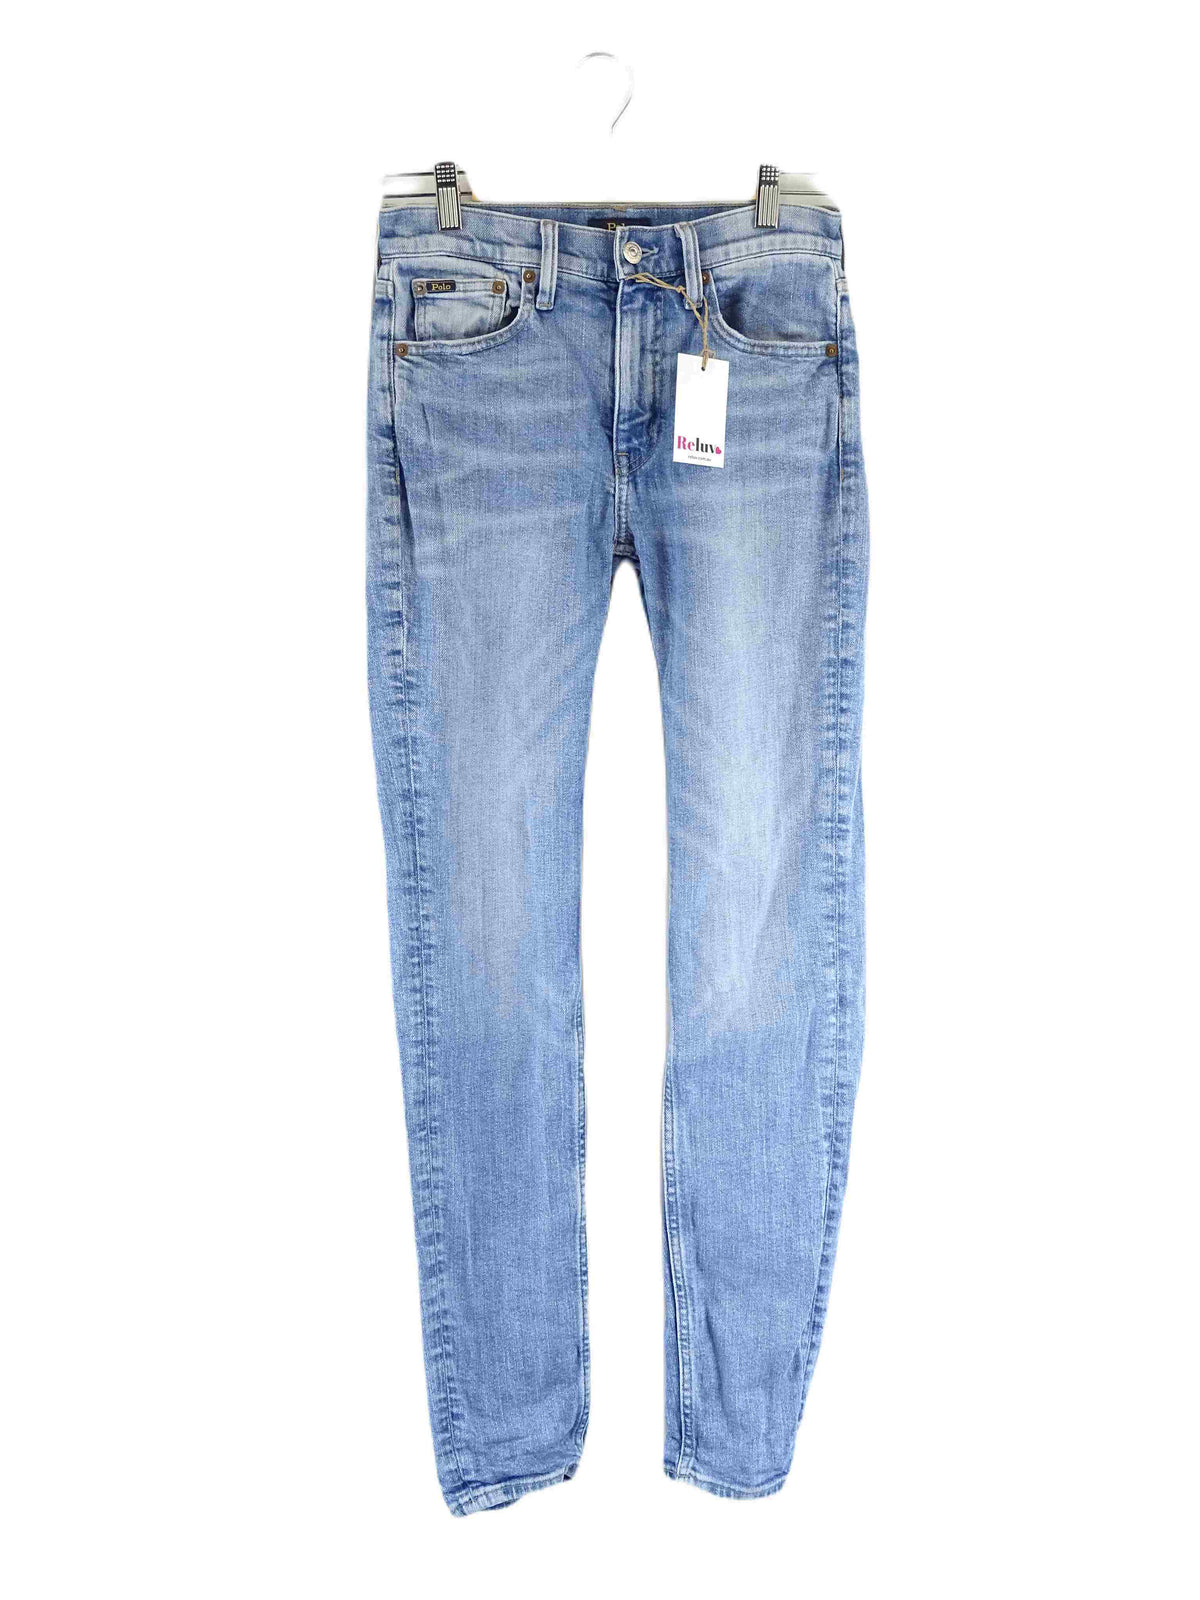 Ralph Lauren Polo Blue Mid Rise Skinny Jeans 26